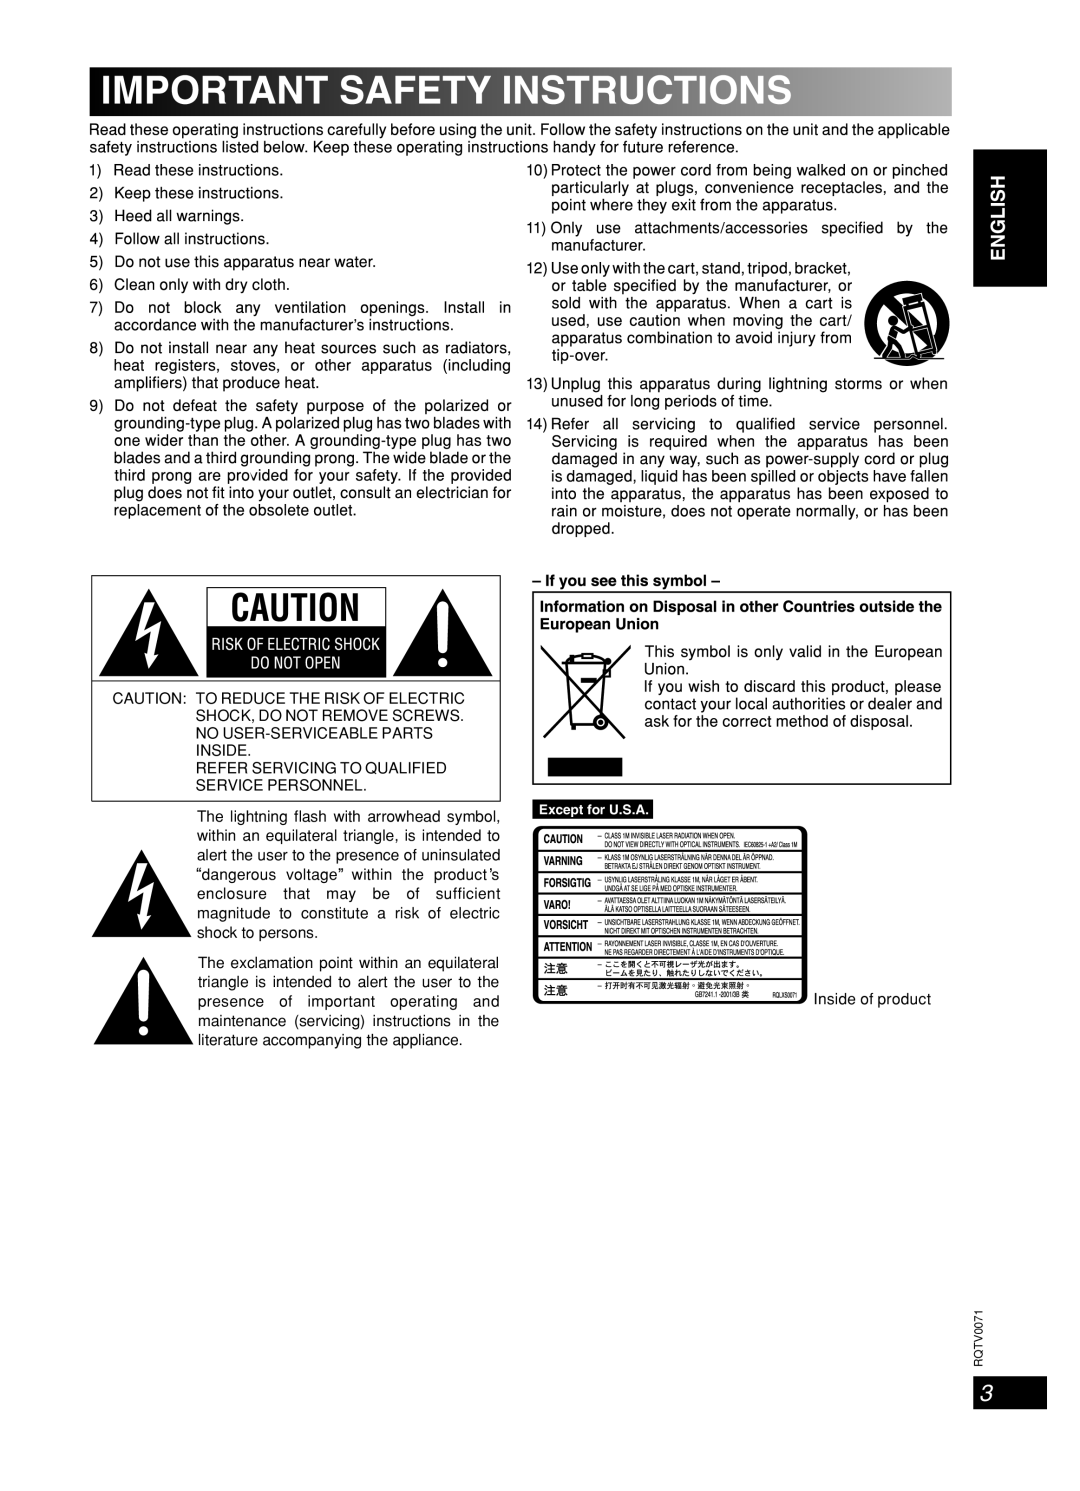 Panasonic SC-AK640 important safety instructions English Dansk, Français Lang - Lang, Important Safety Instructions 